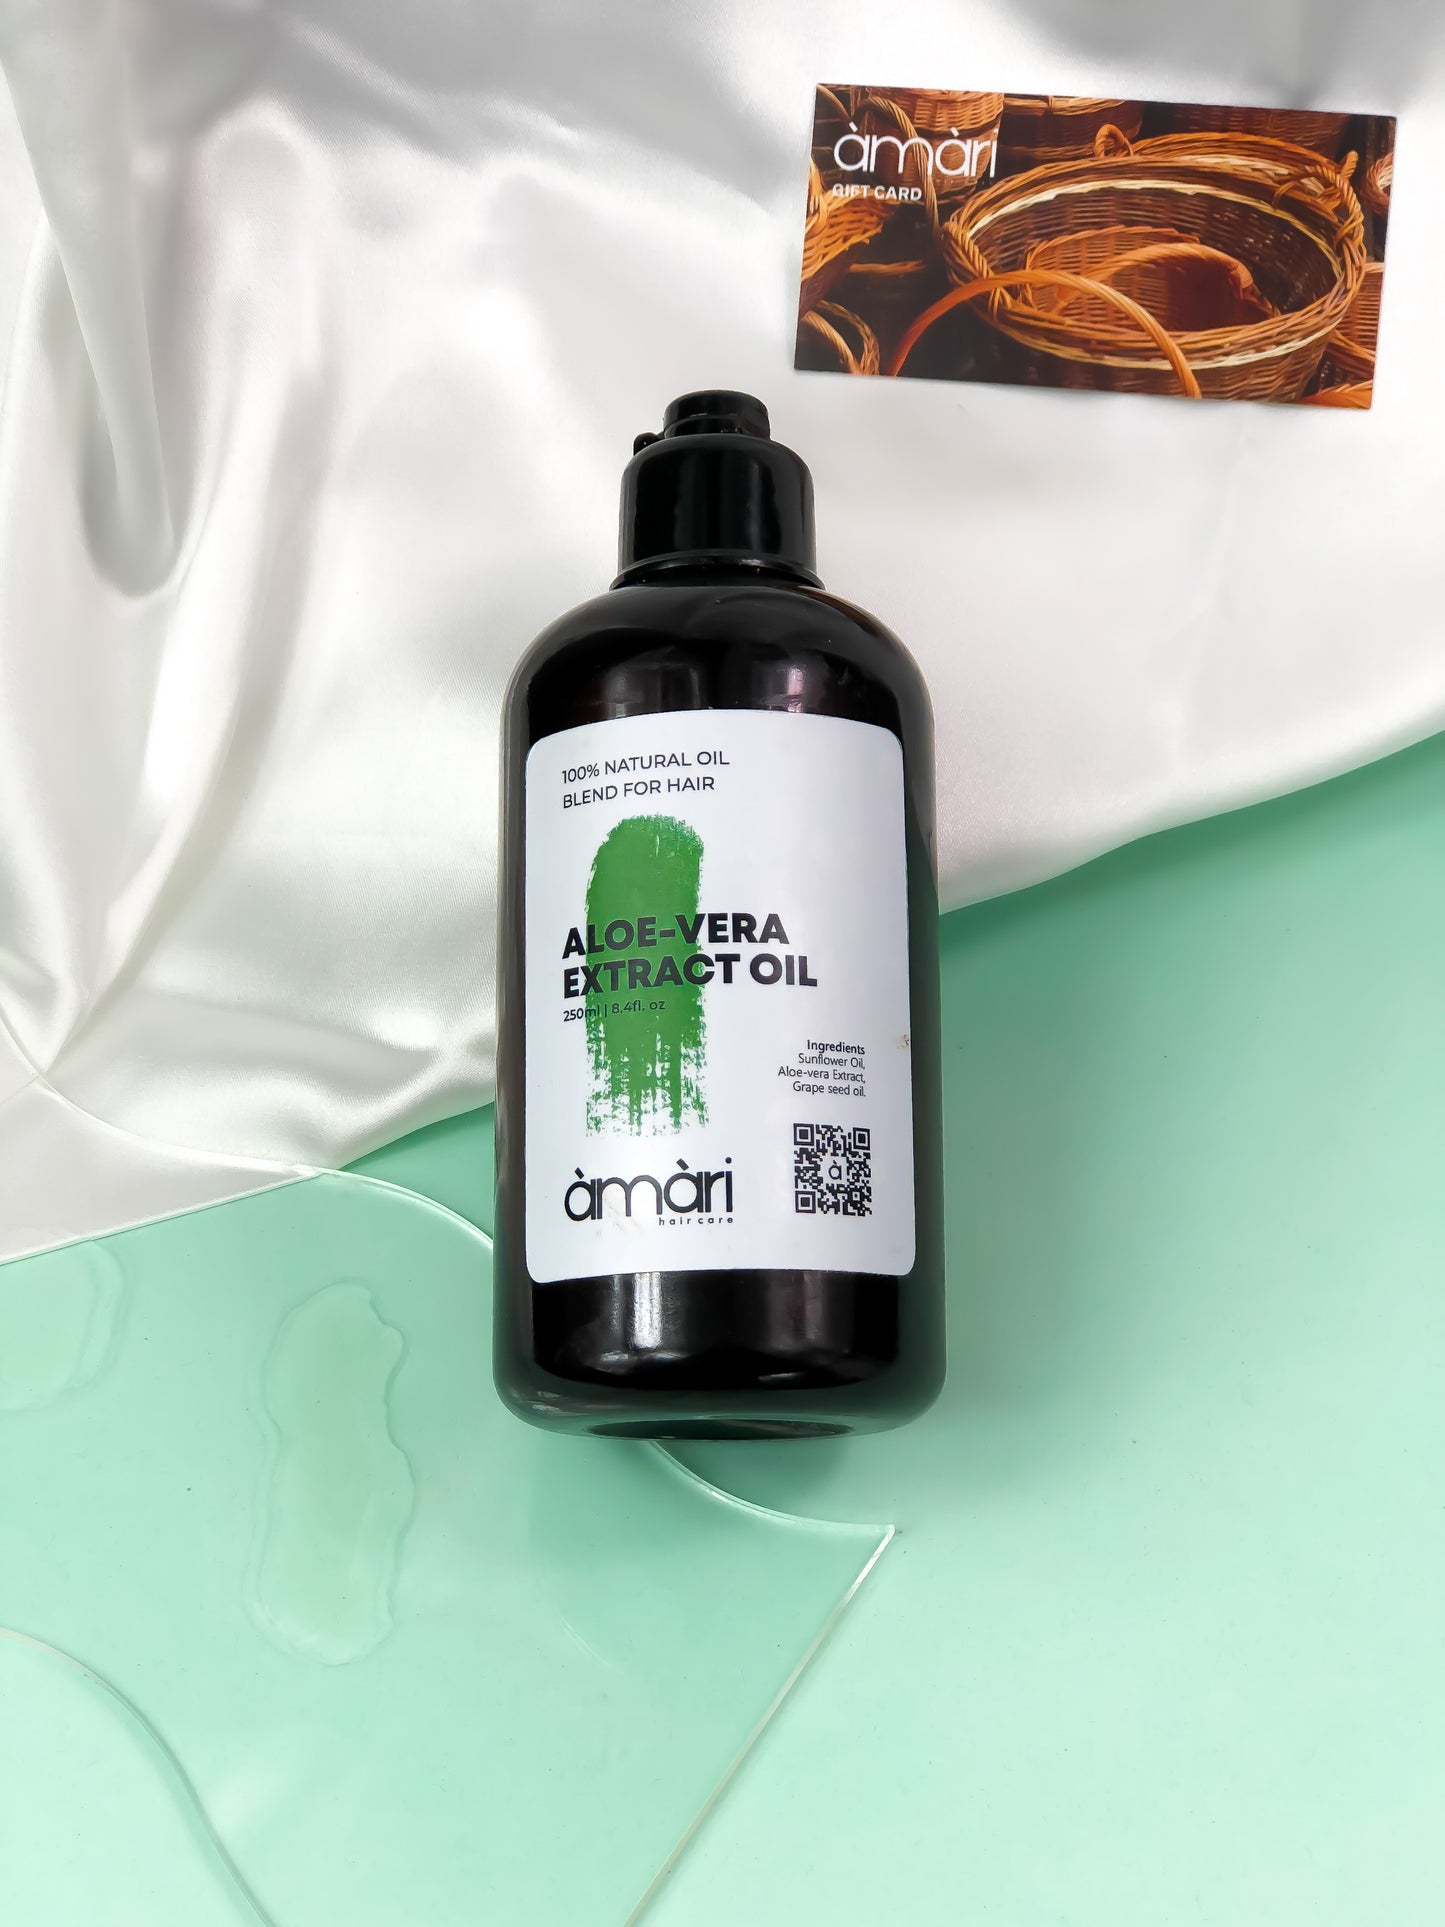 Aloe Vera Extract Oil Amari Hair Care Ltd